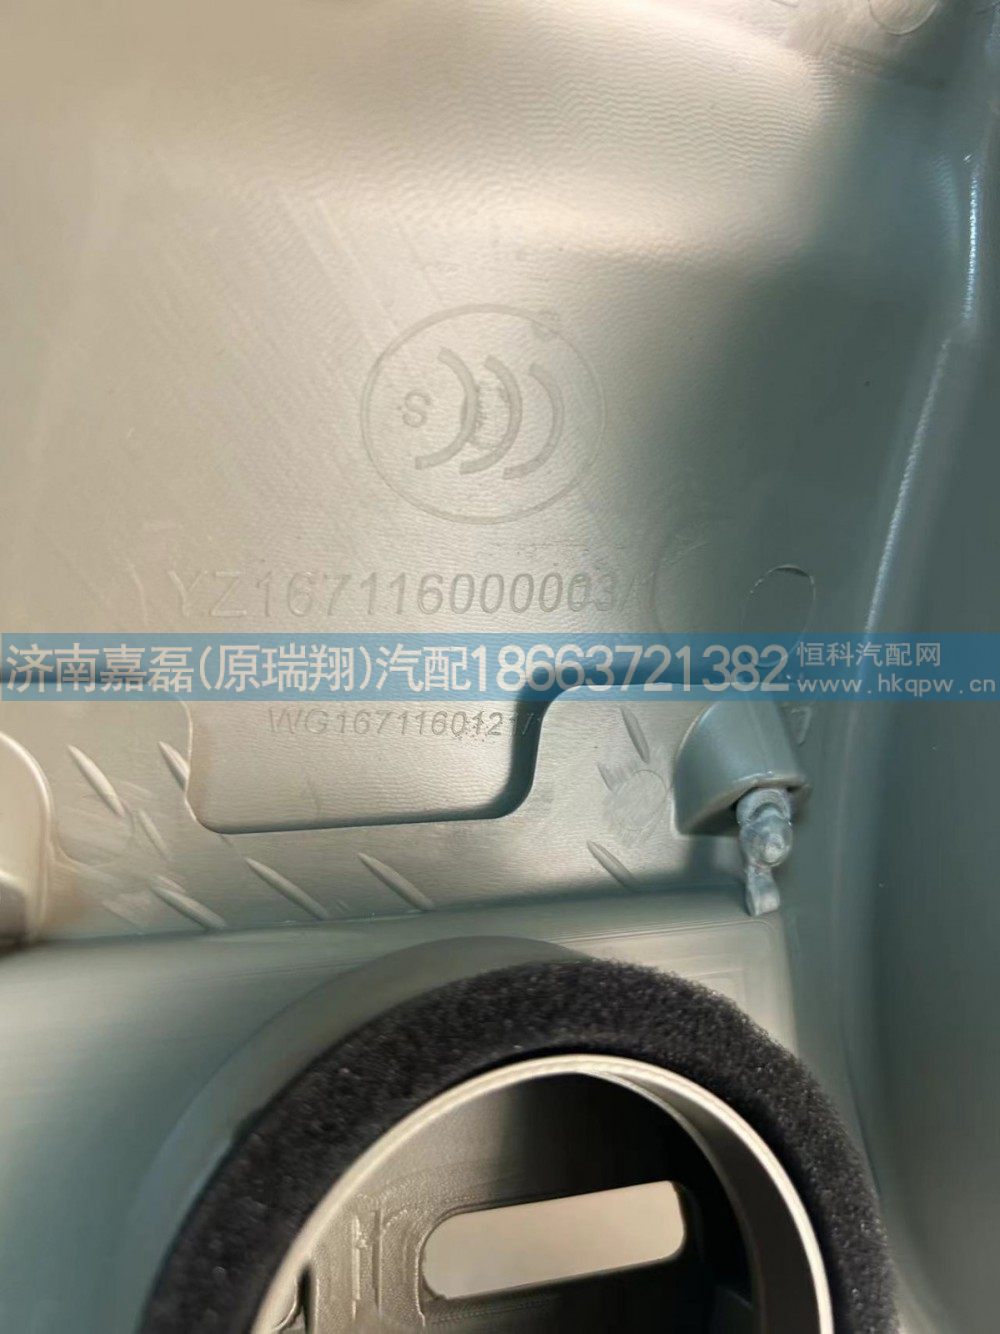 YZ167116000003,左下护板总成,济南嘉磊汽车配件有限公司(原济南瑞翔)